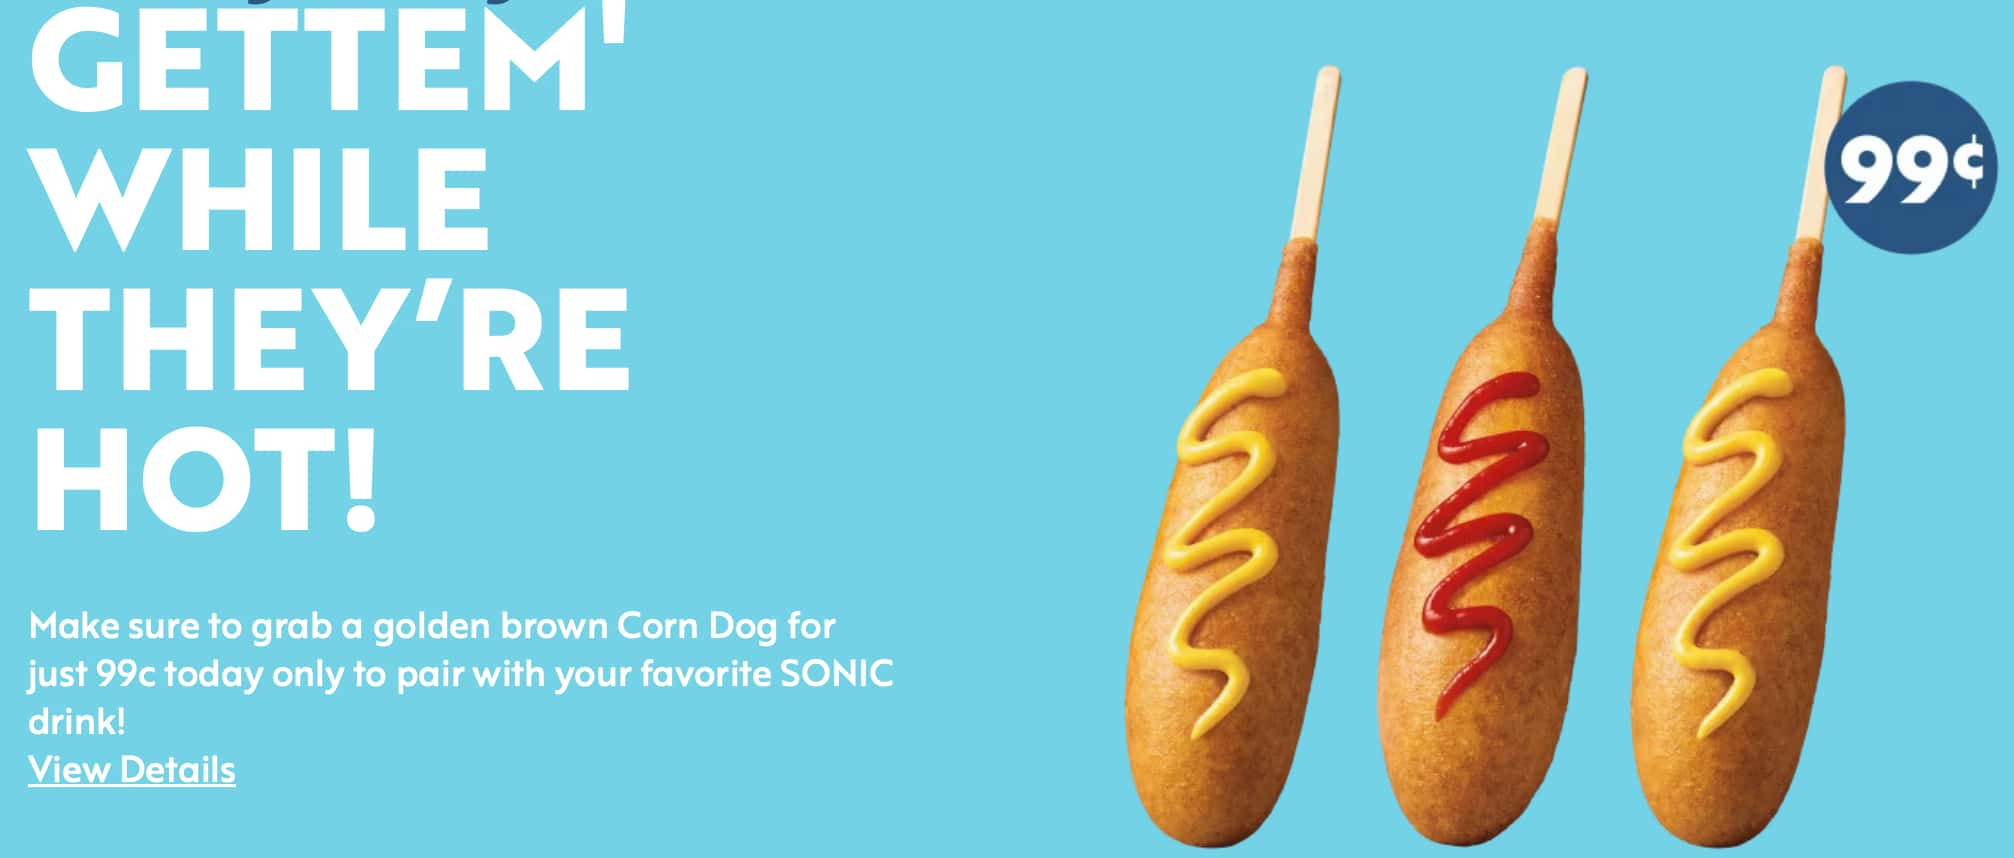 Sonic Corn Dogs Day (99¢ Corn Dogs)